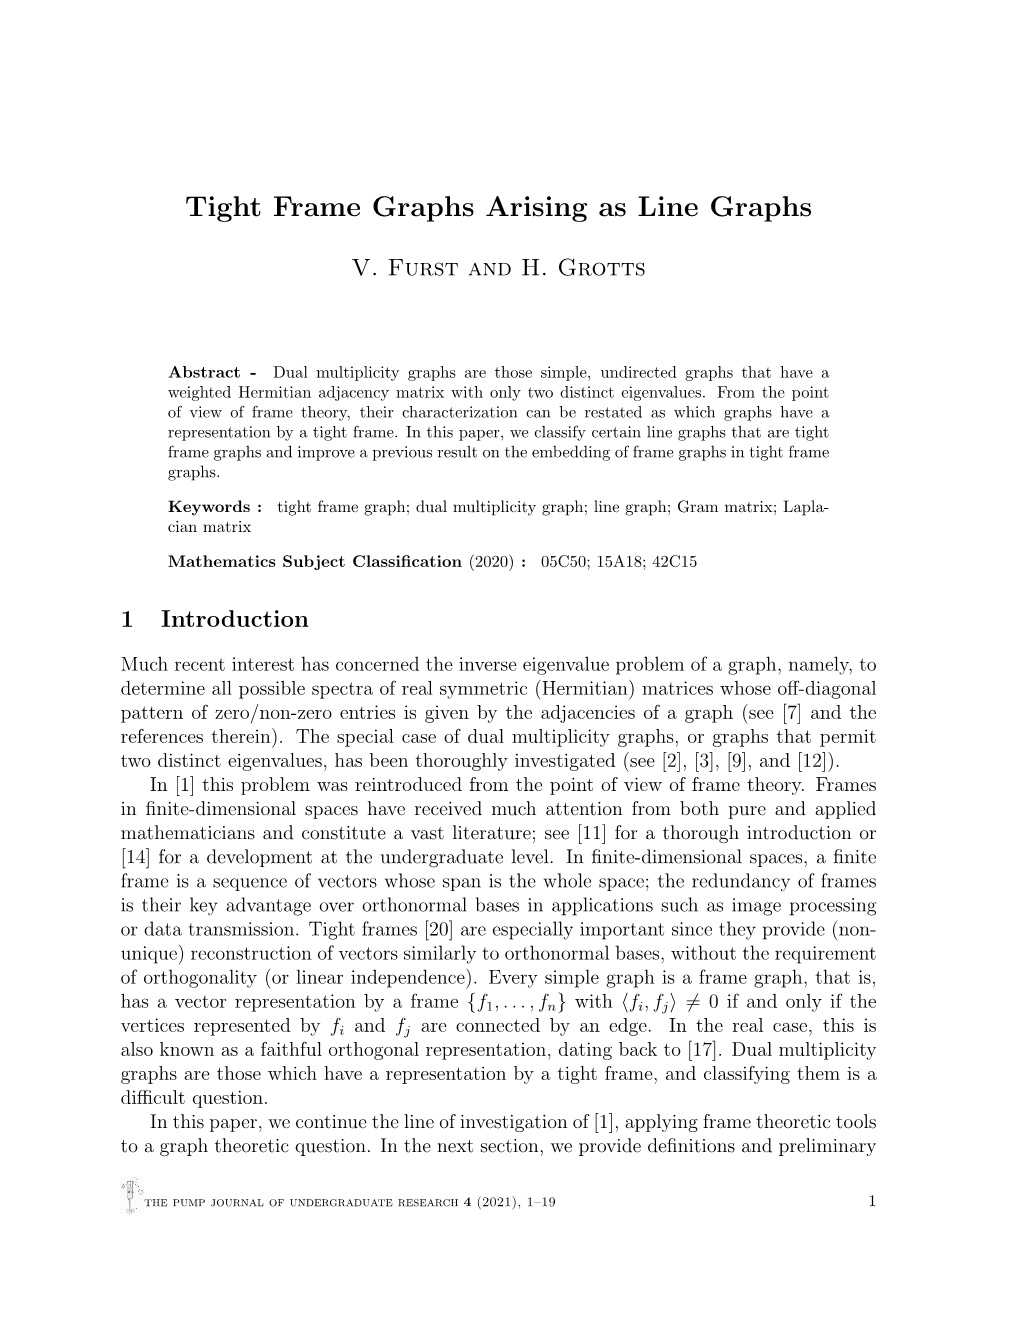 Tight Frame Graphs Arising As Line Graphs